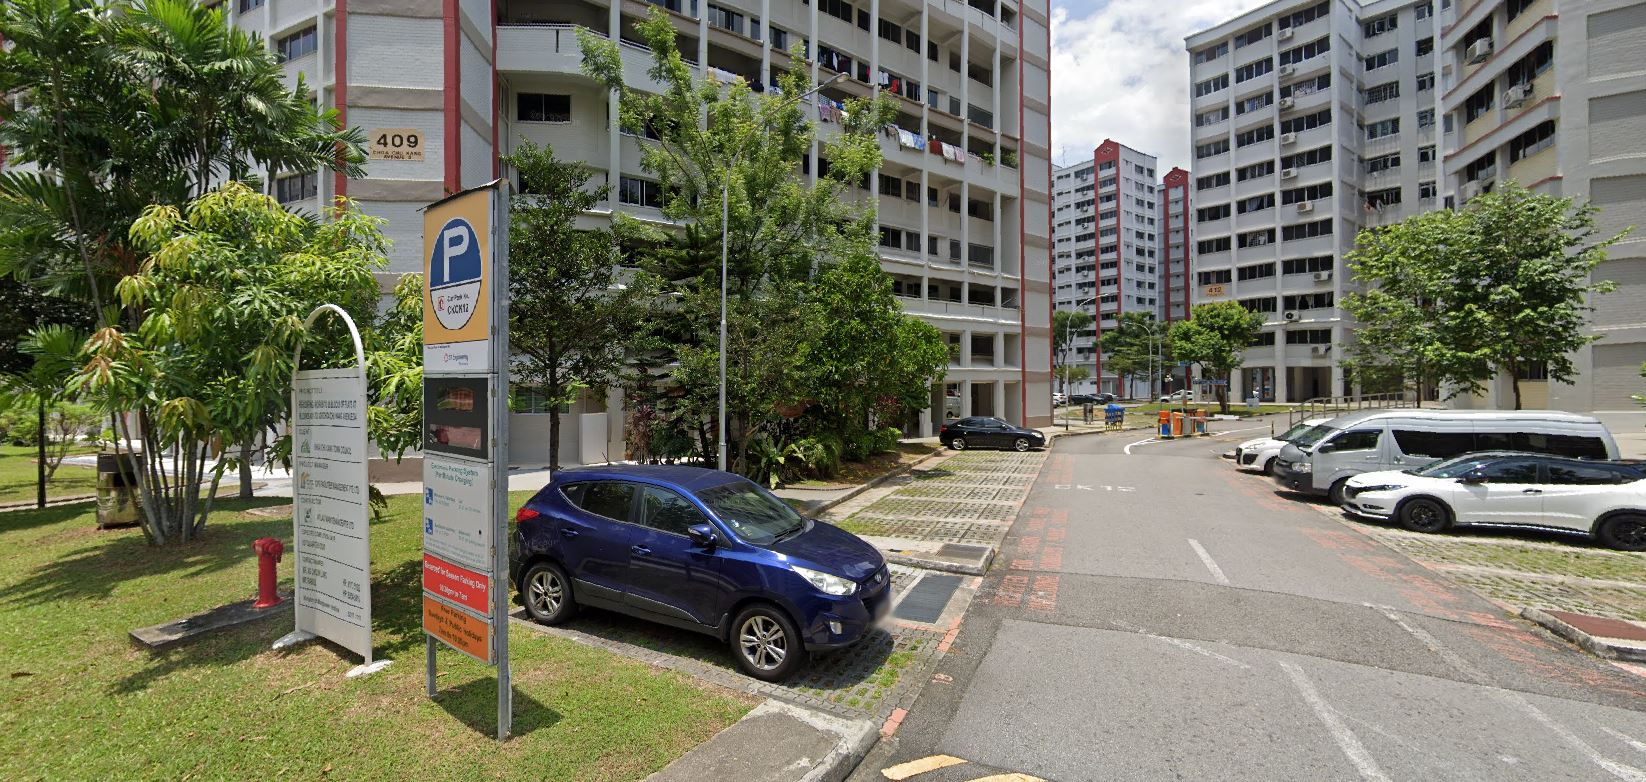 Man allegedly harms self at Choa Chu Kang carpark, gets arrested & sent to hospital